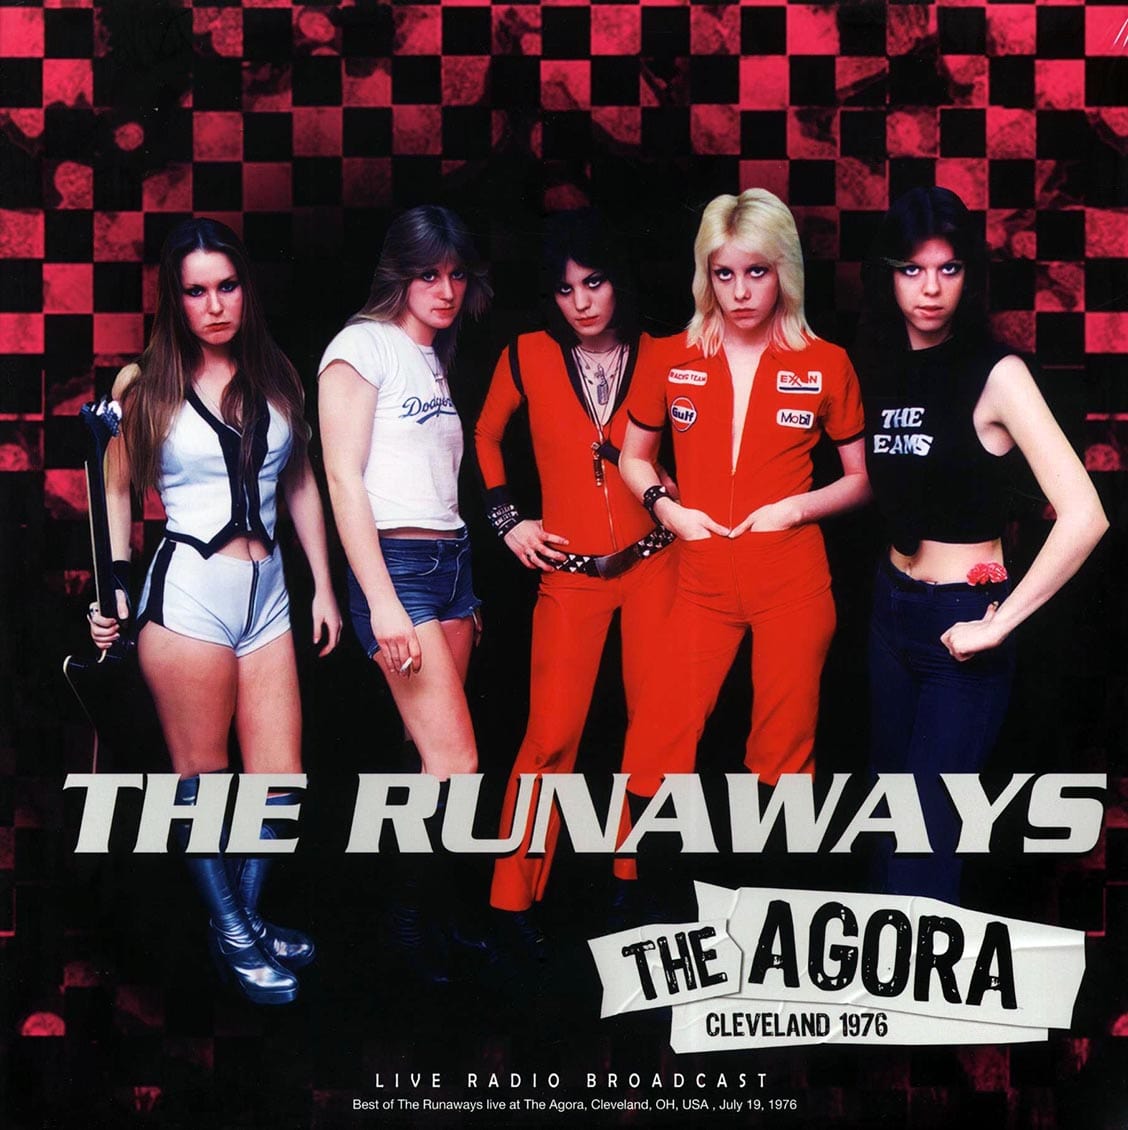 THE RUNAWAYS: The Agora Cleveland 1976 - Live Radio Broadcast LP